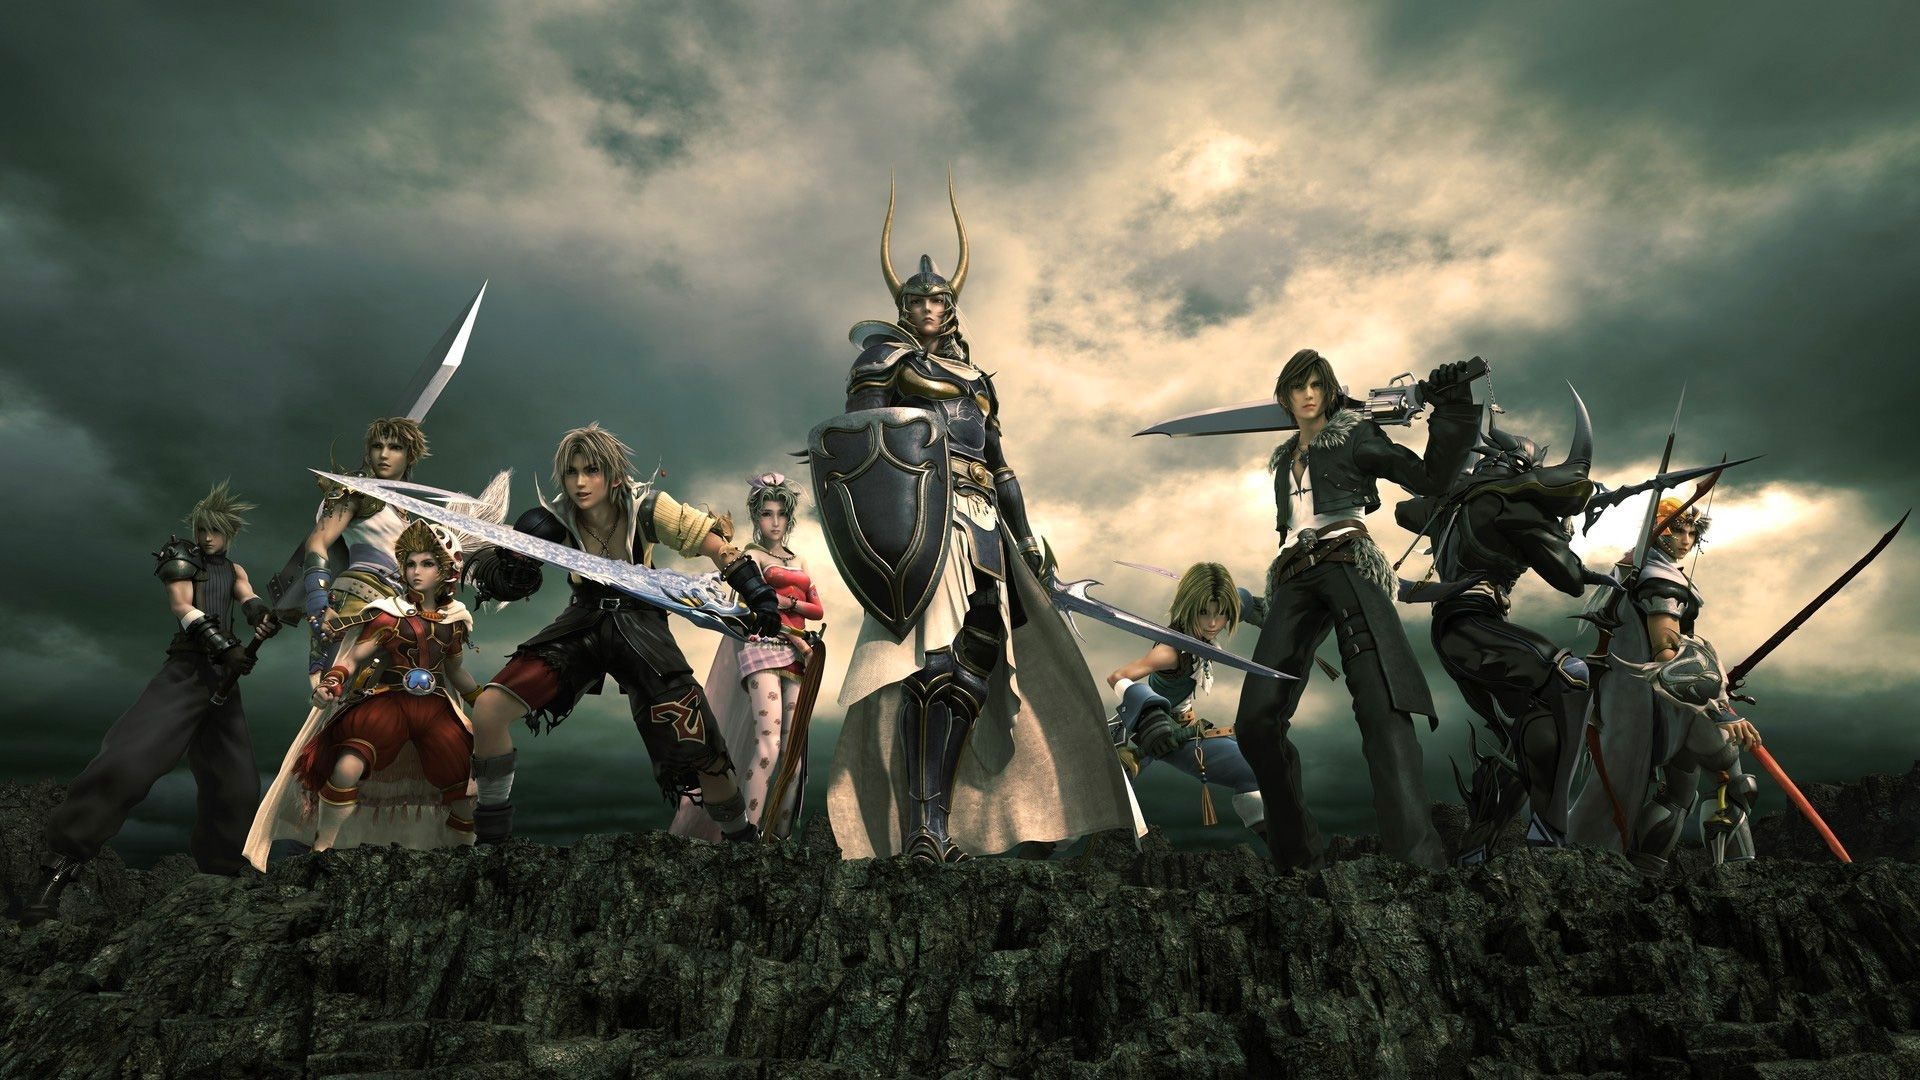 Final Fantasy Needs A Dynasty Warriors Game Already